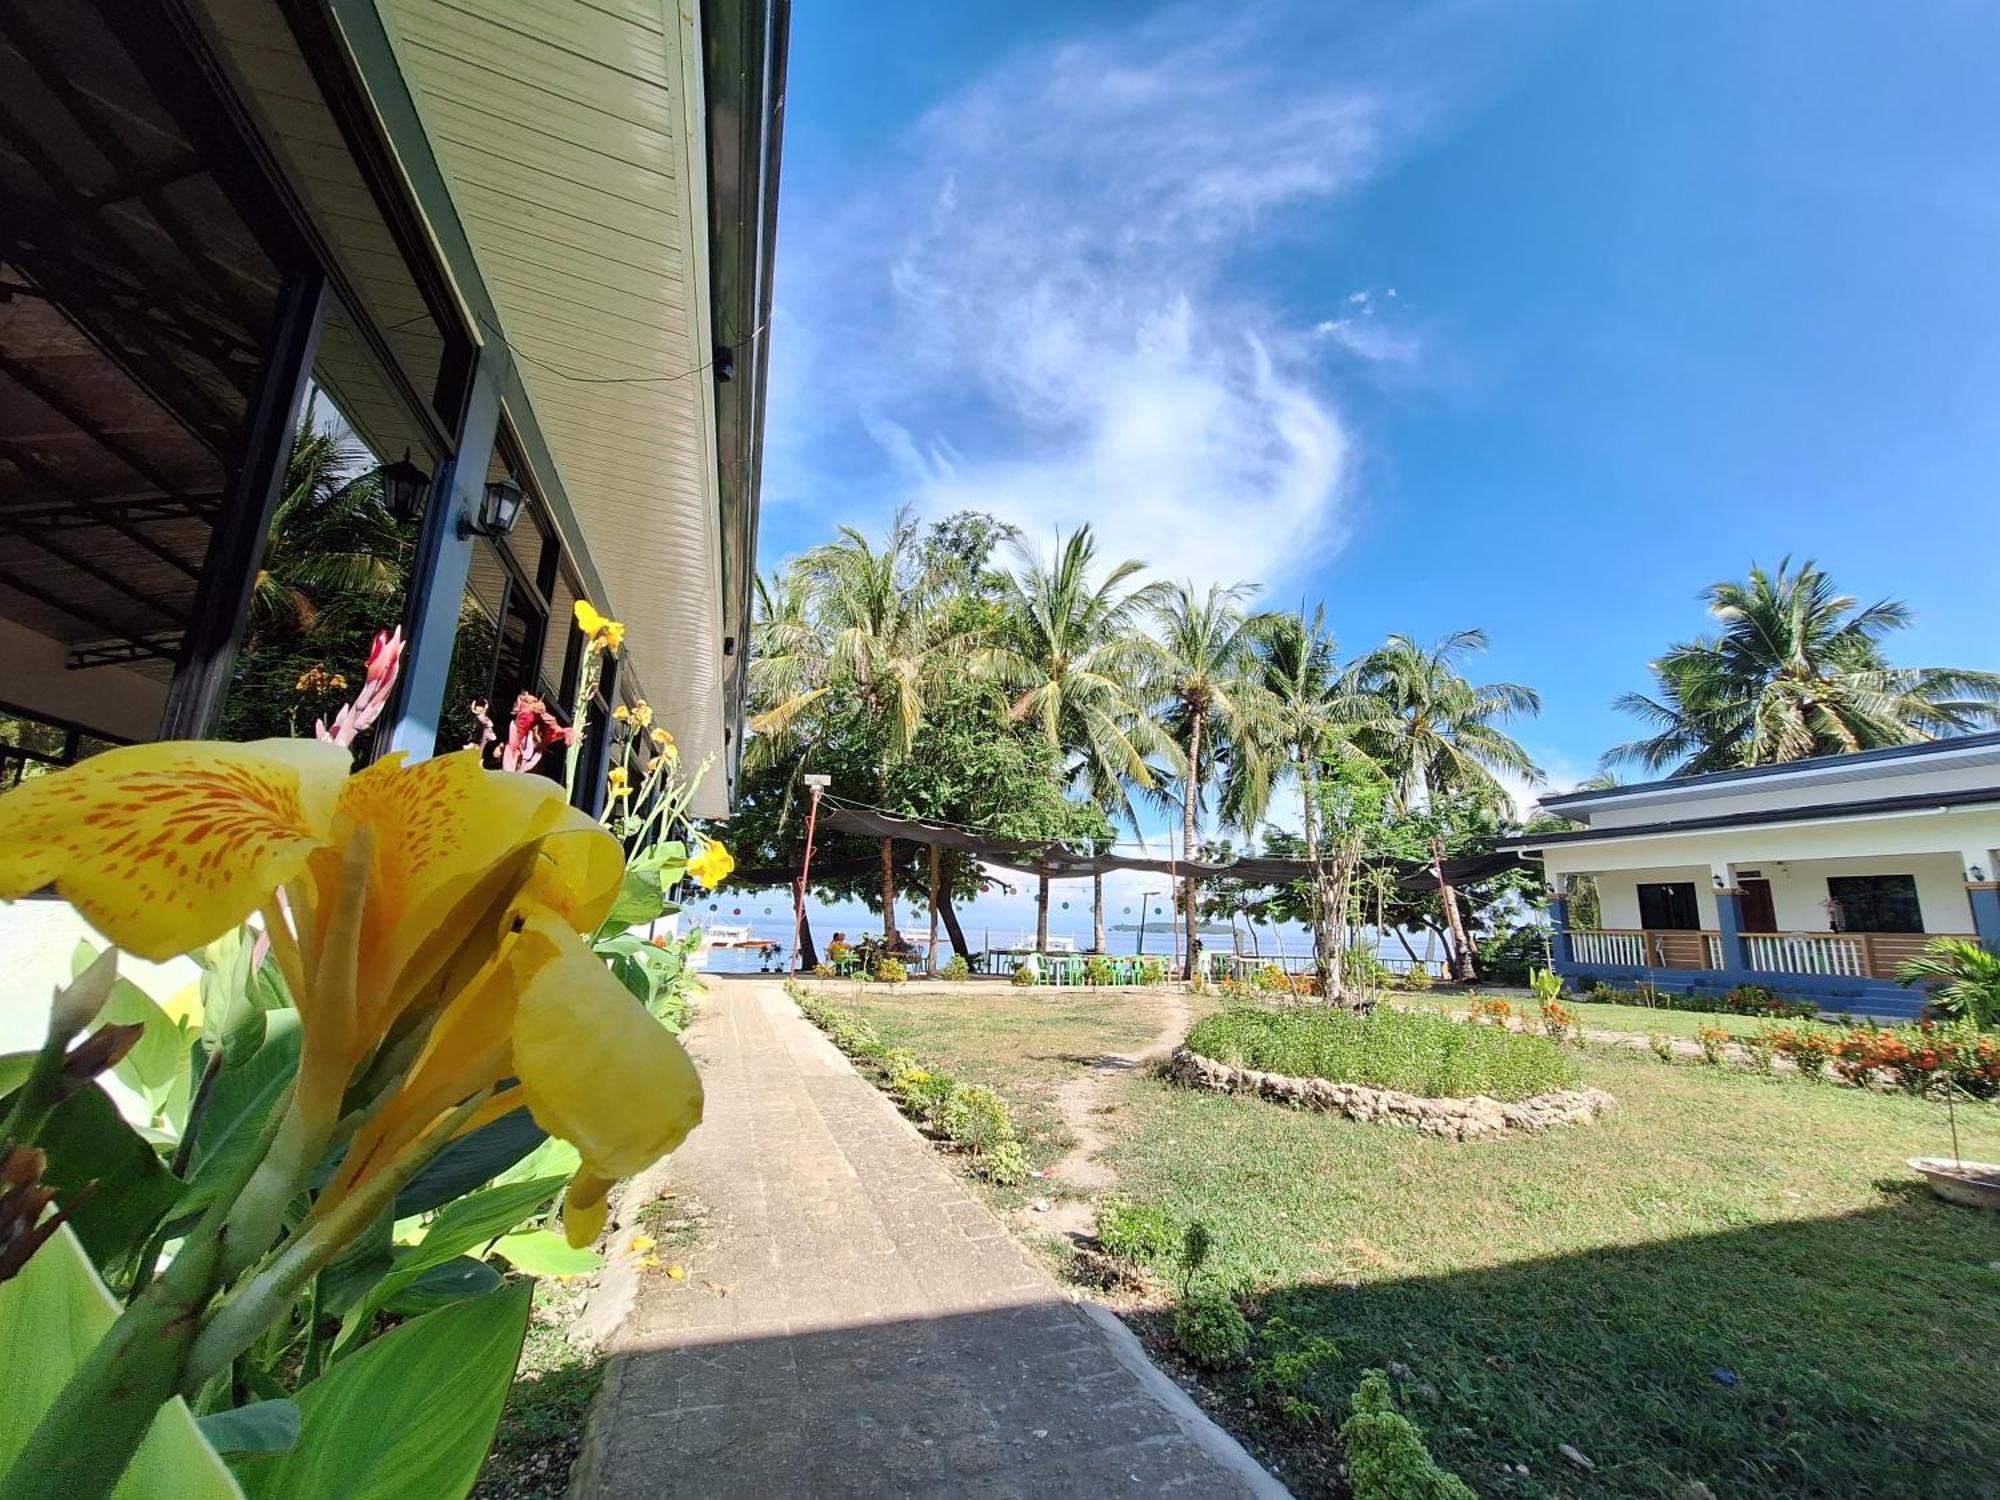 Island Front - Bangcogon Resort And Restaurant Oslob Exterior foto